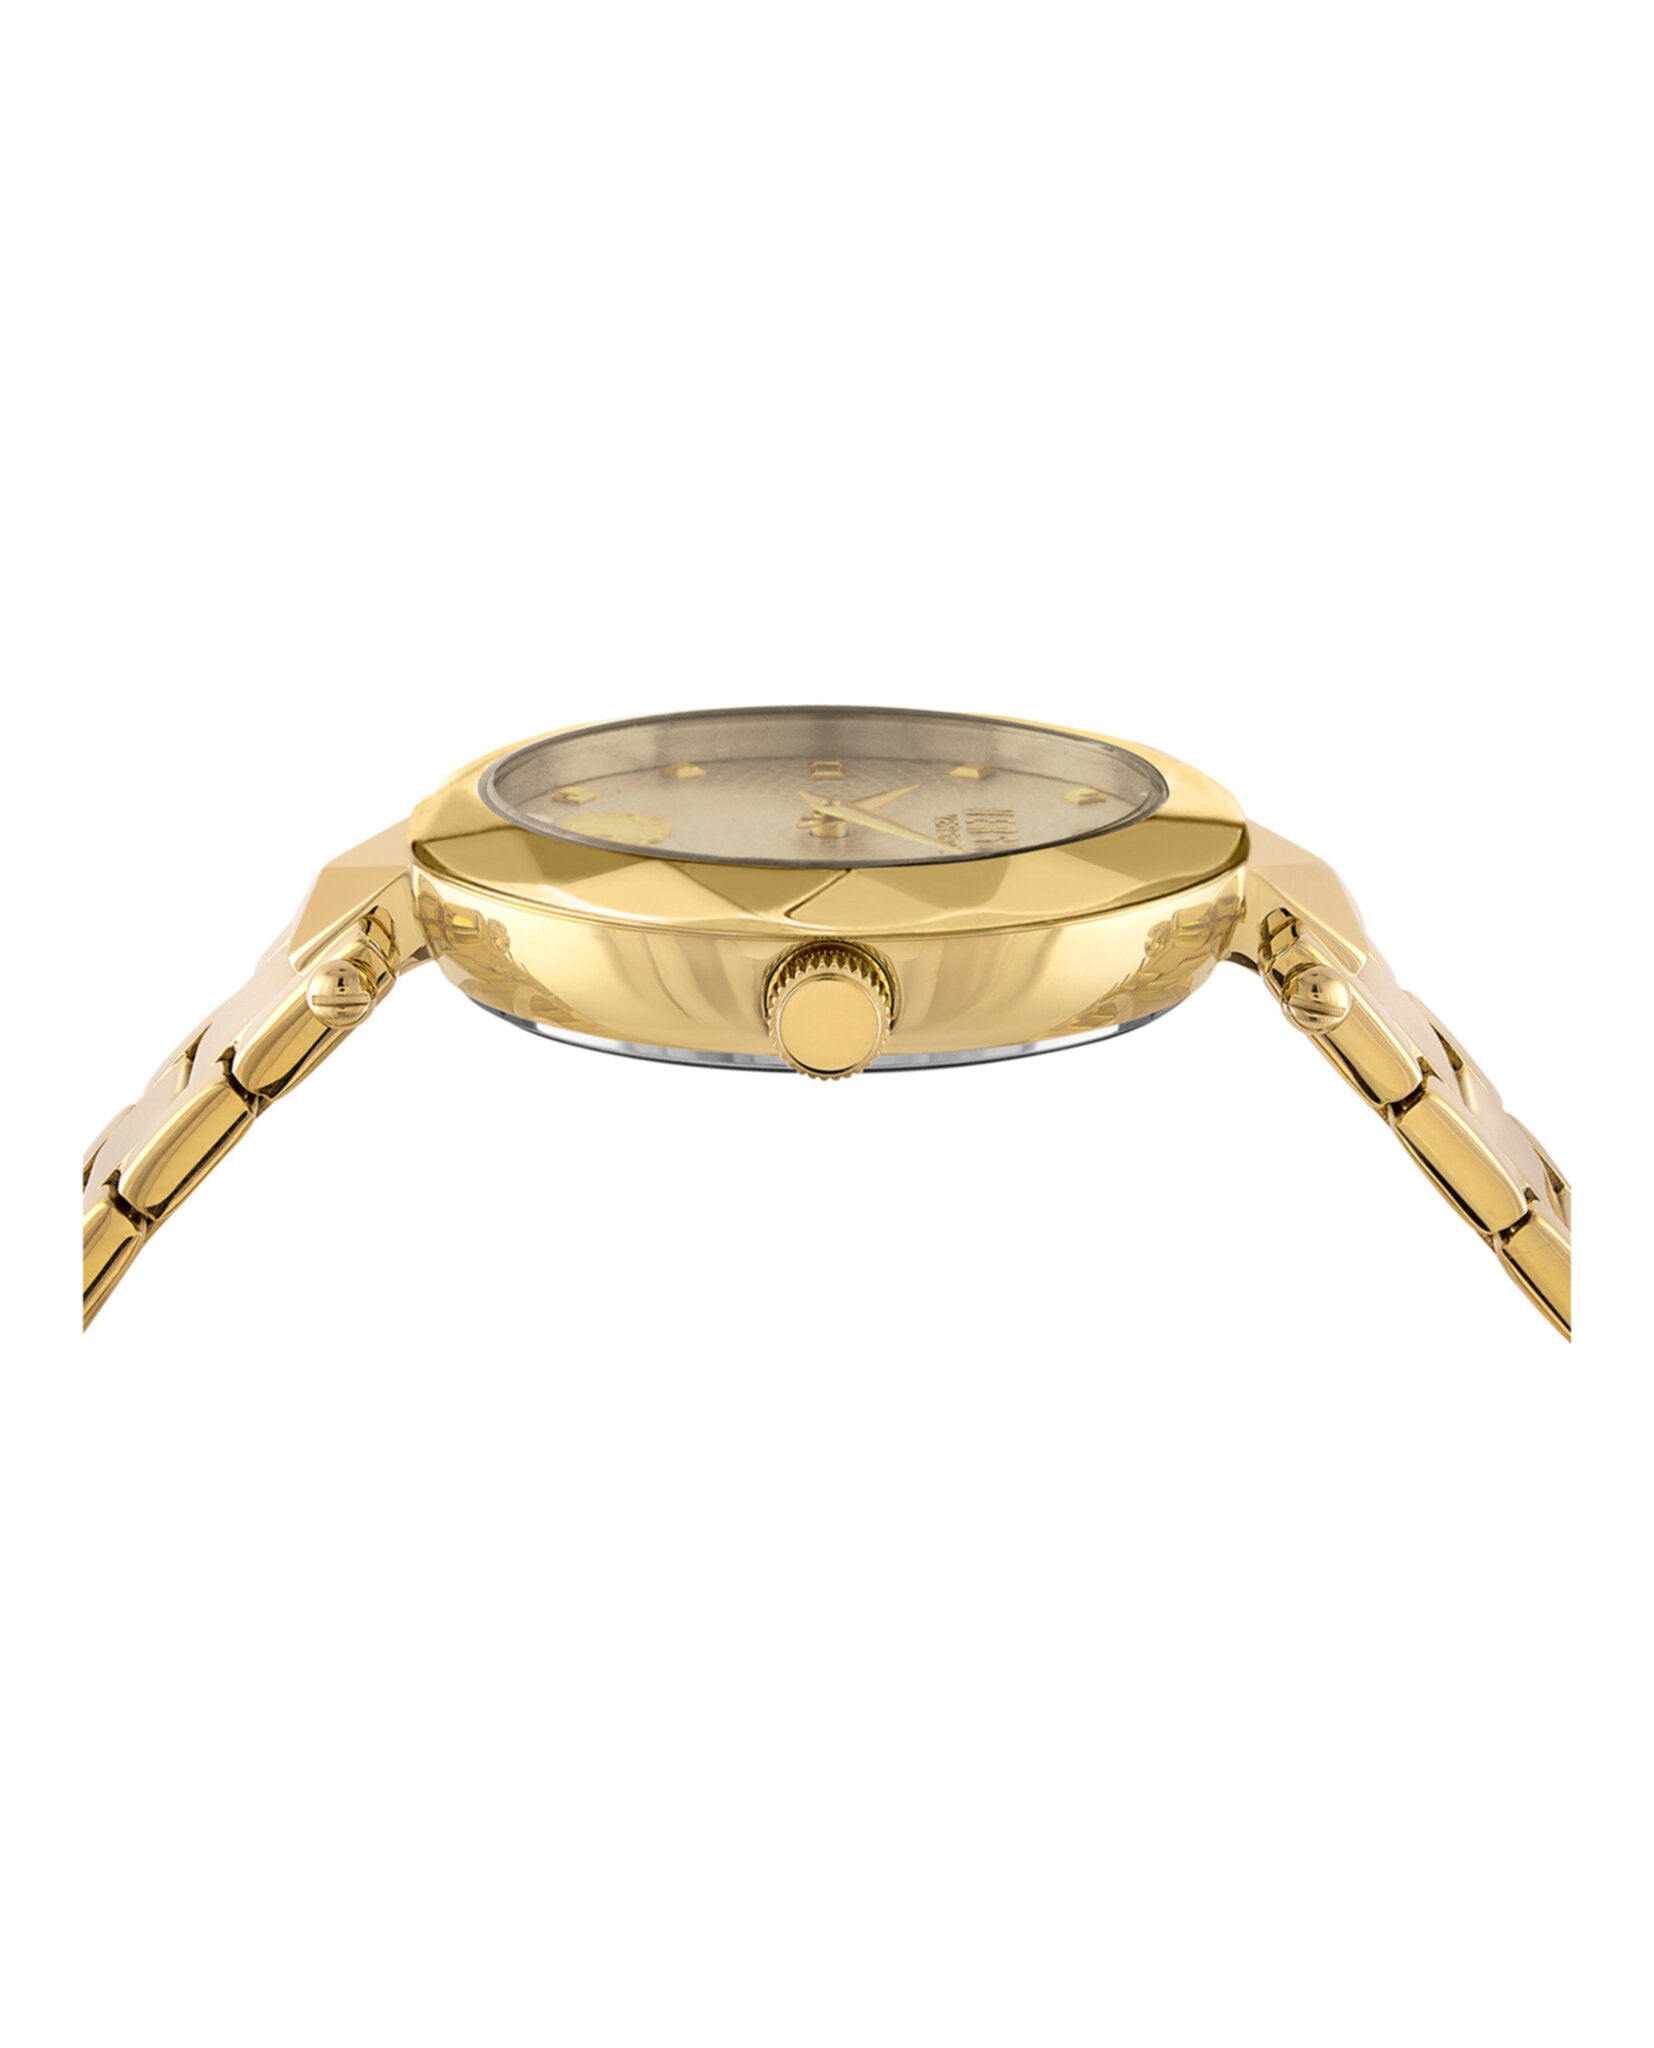 Covent Garden Bracelet Watch